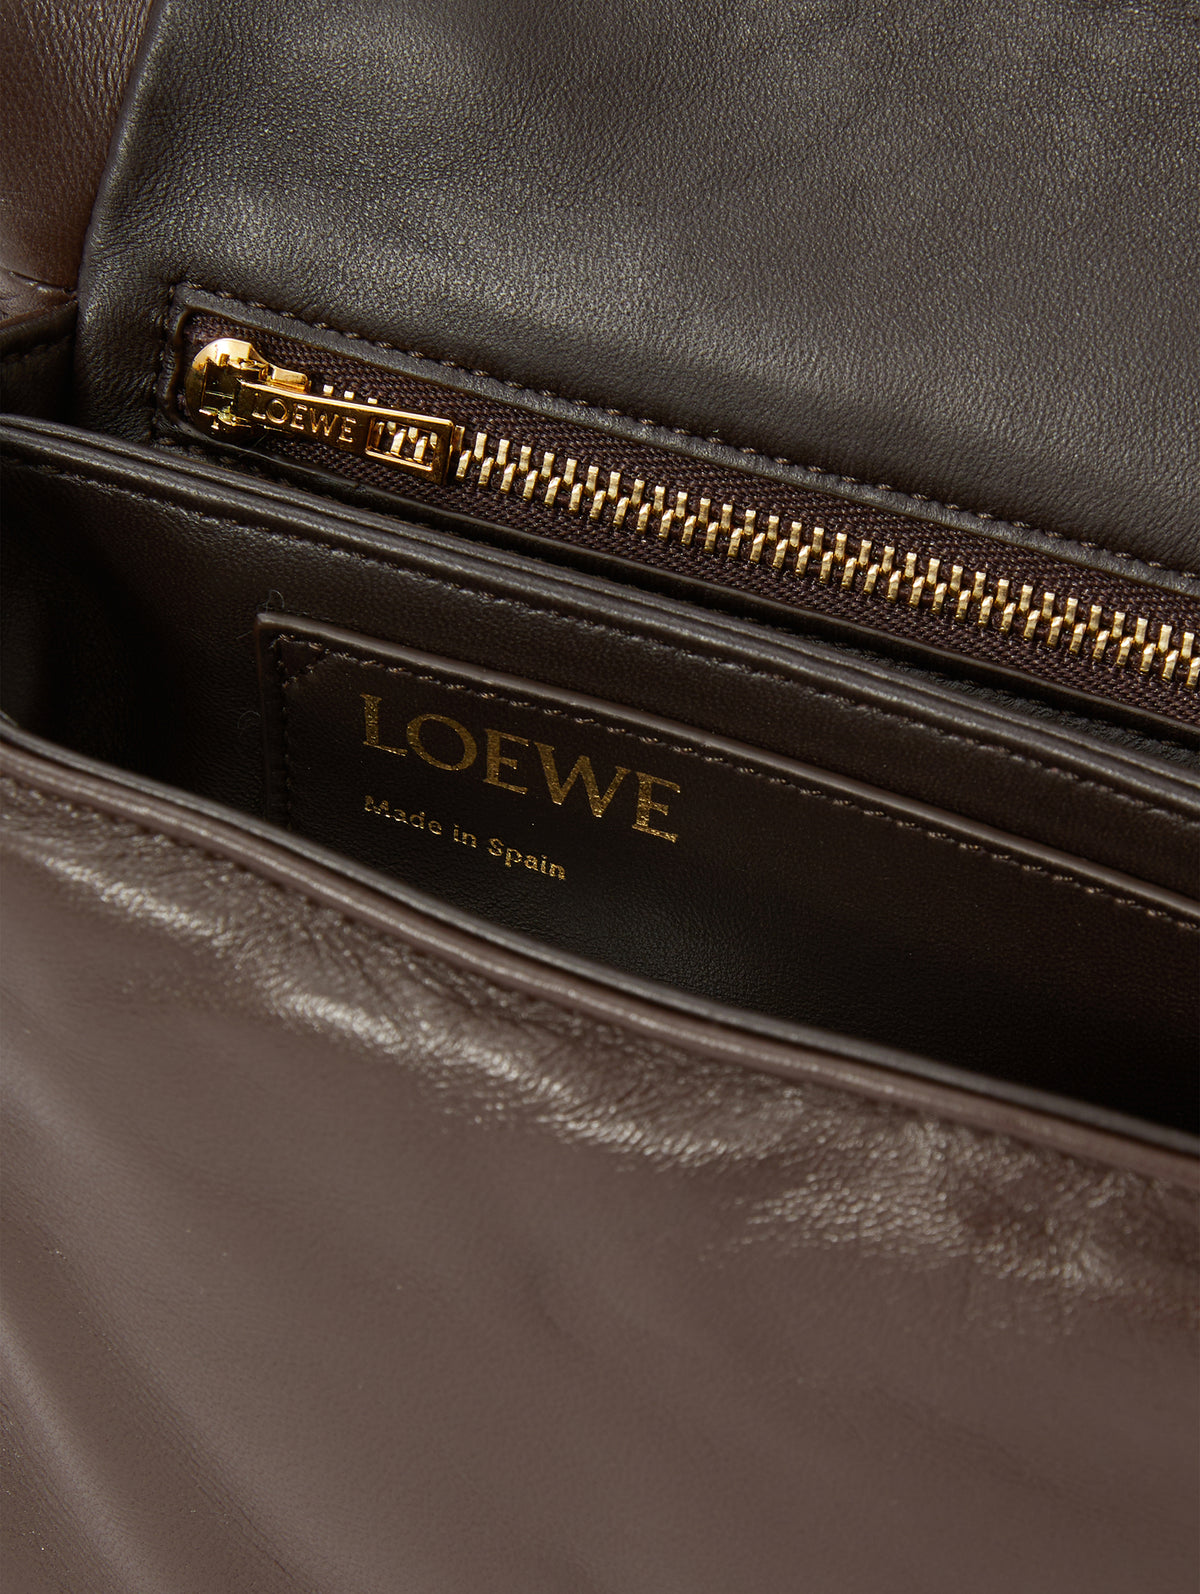 NWT LOEWE Clay Green Leather Puffer Goya Shoulder Bag Size OS